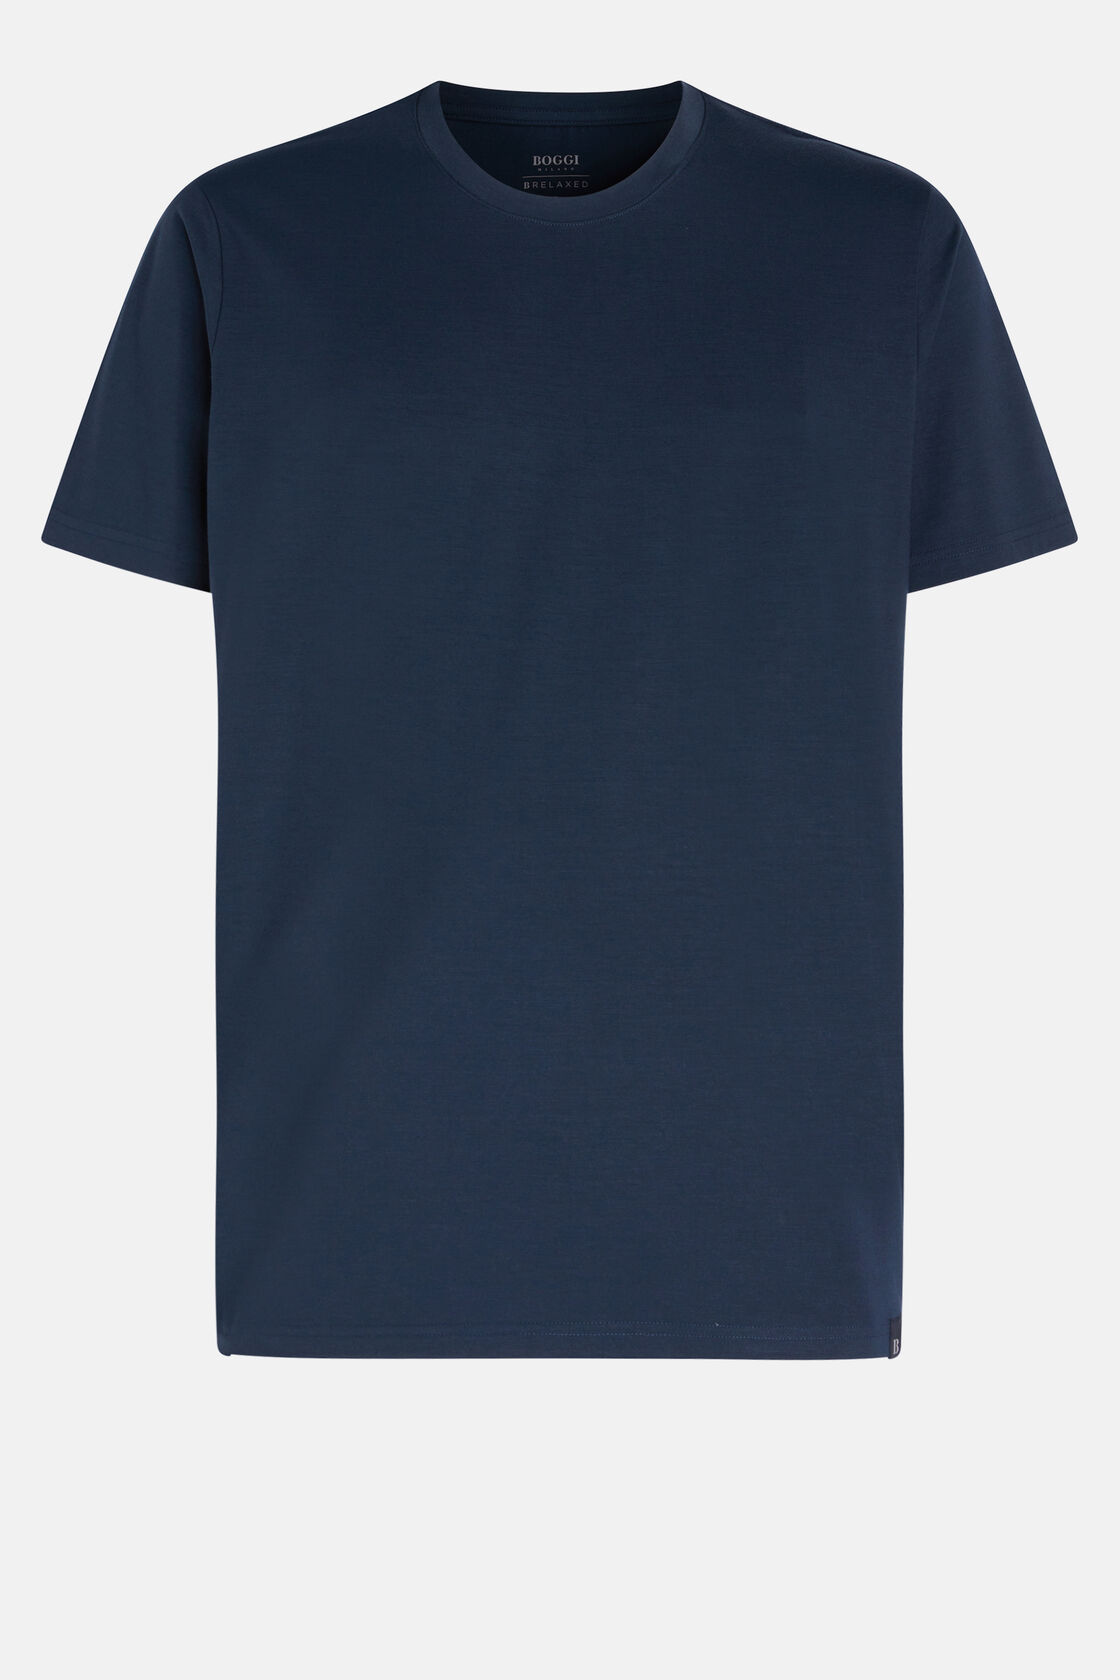 Pyjama-t-shirt Aus Viskosemischung, Navy blau, hi-res